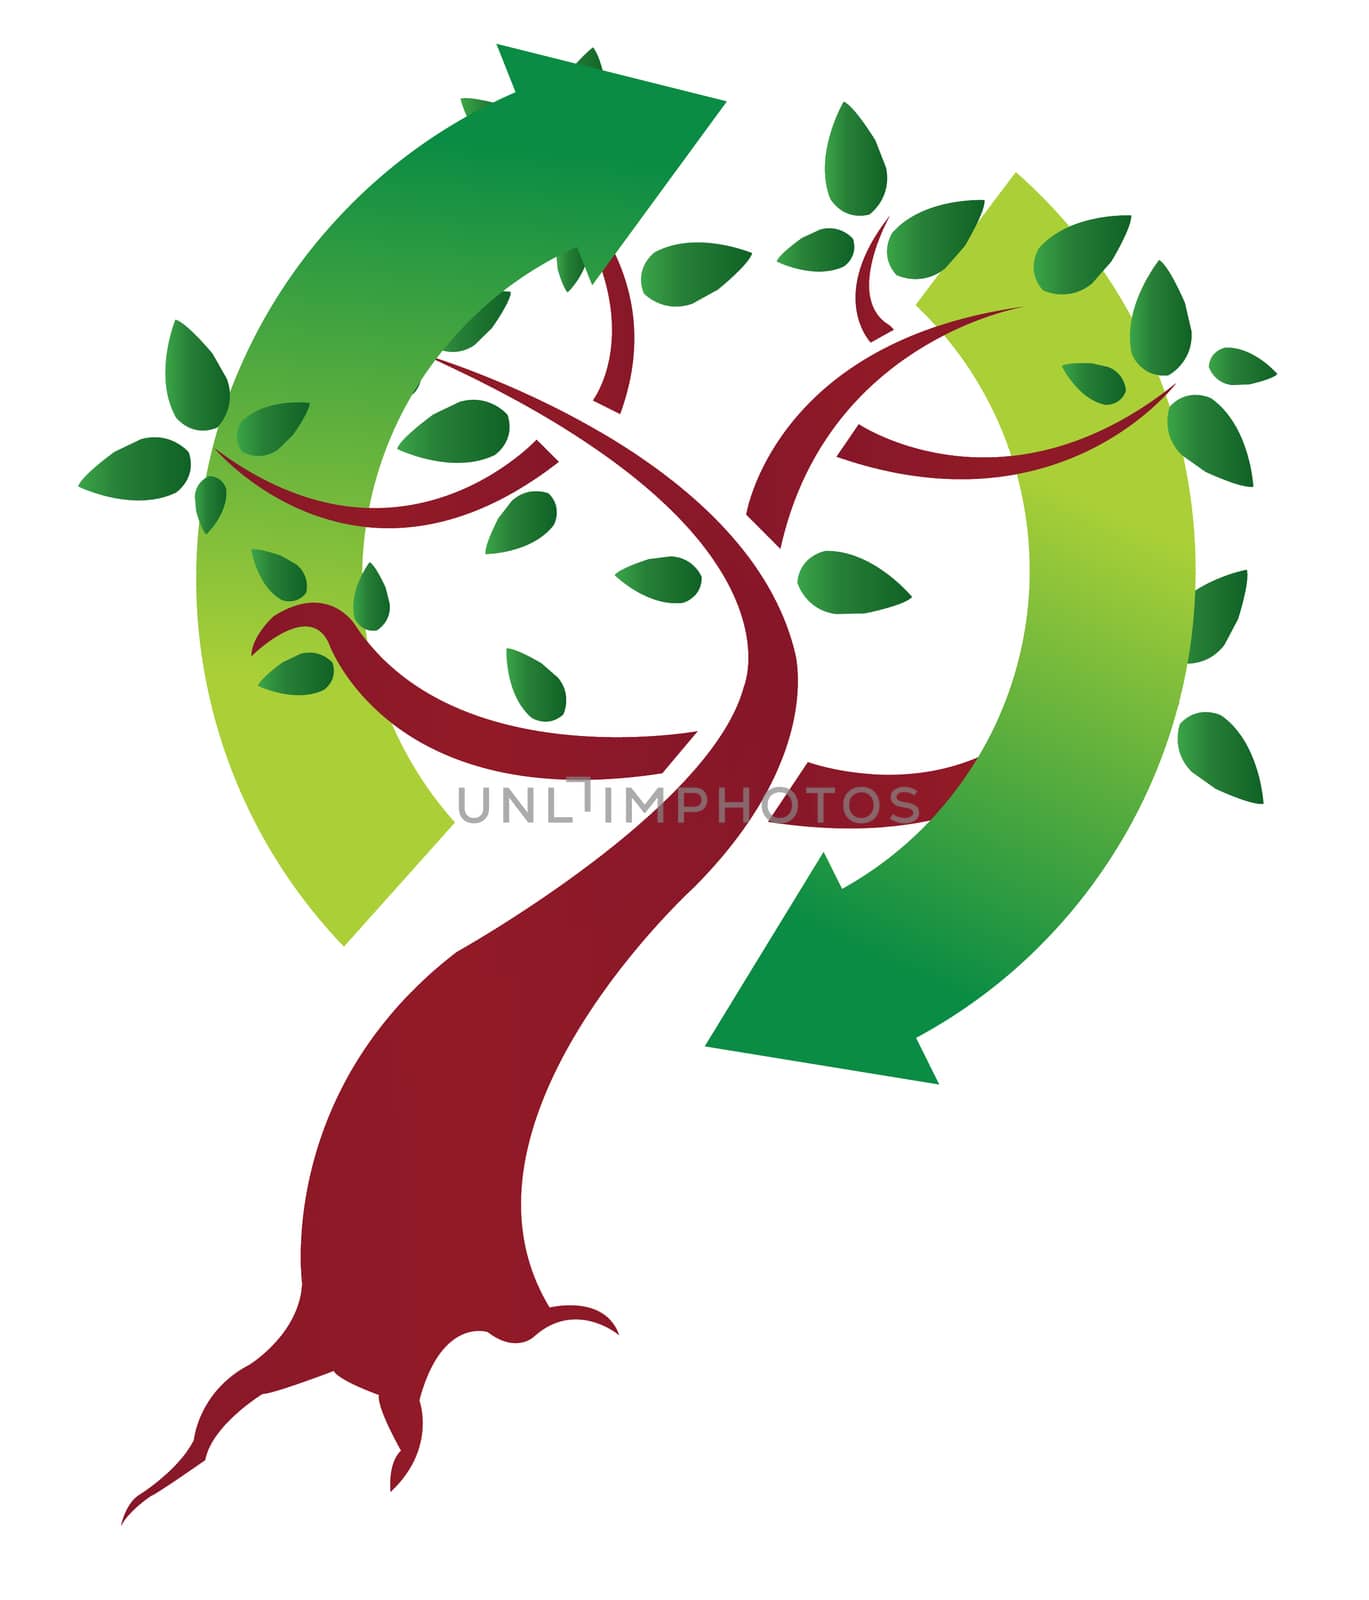 ecological tree concept illustration design over white